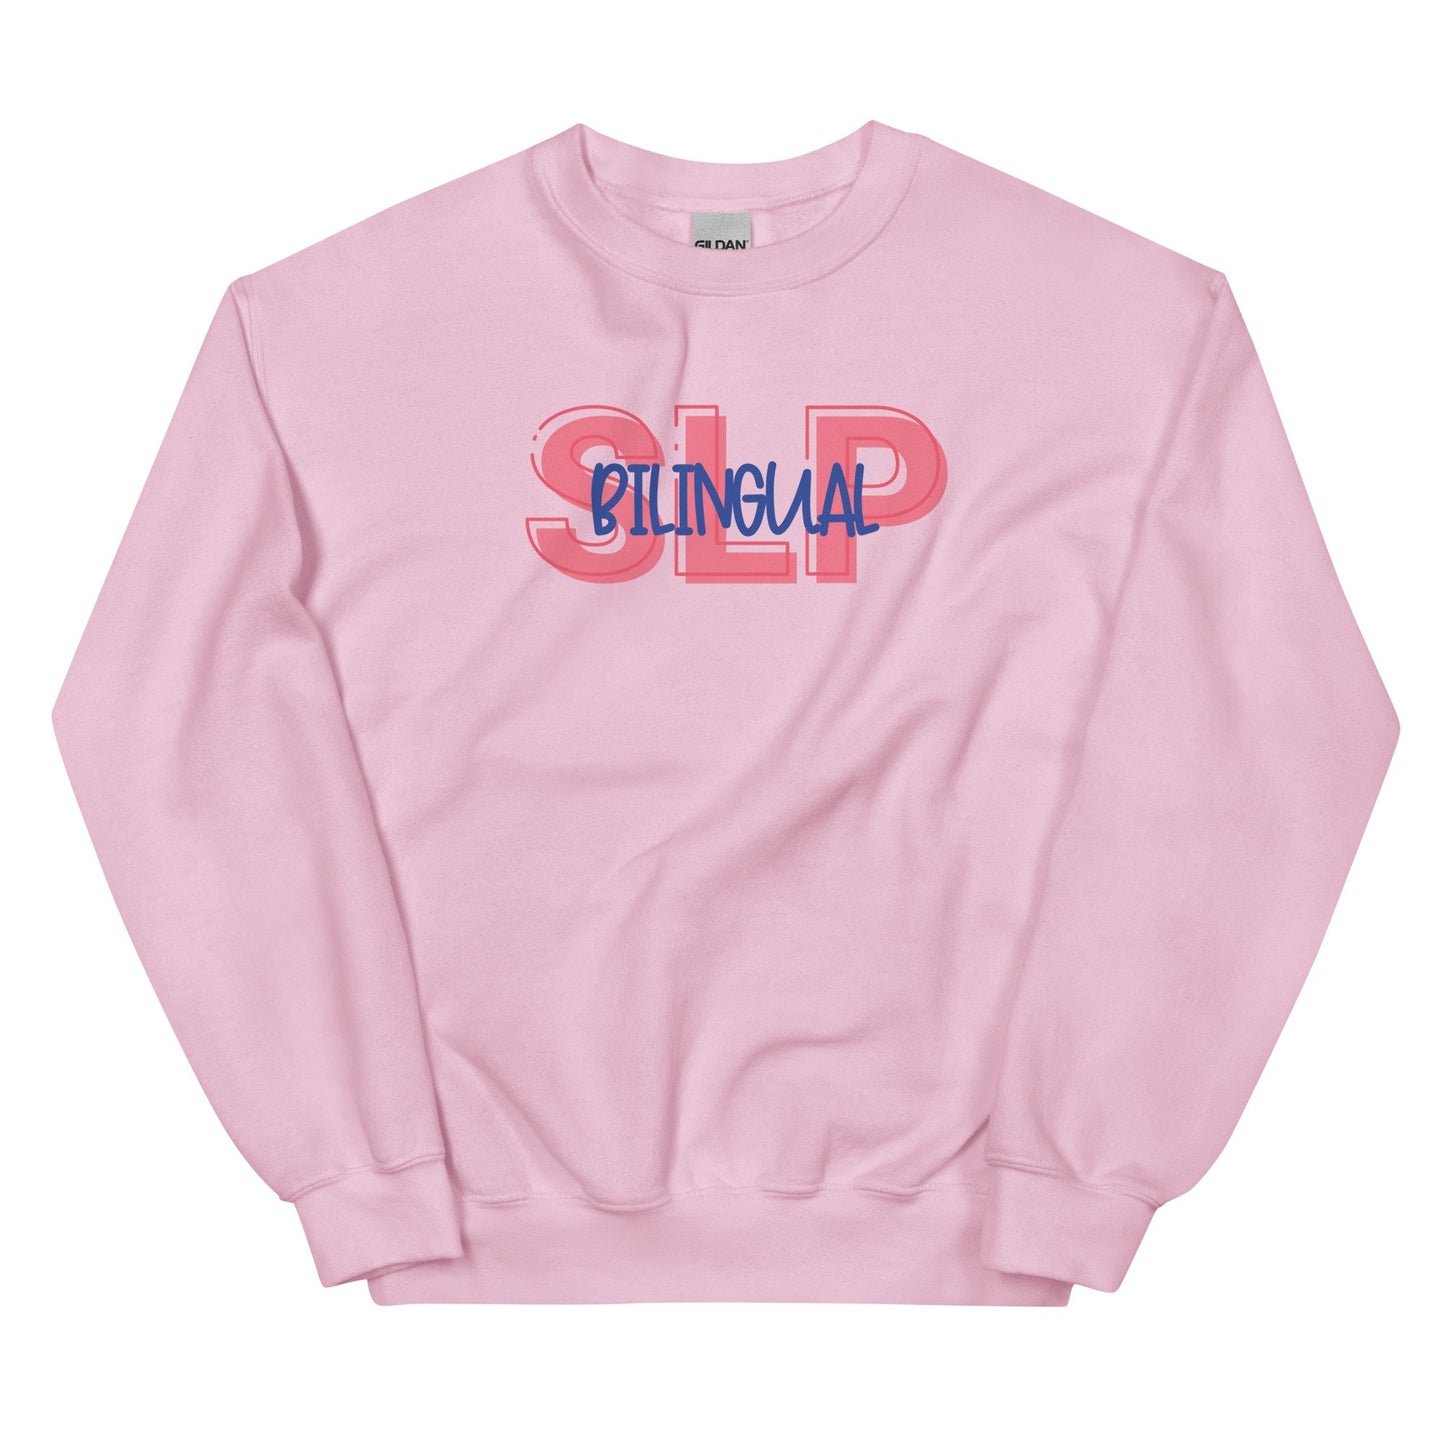 unisex-crew-neck-sweatshirt-light-pink-front-63084c454a0bc.jpg